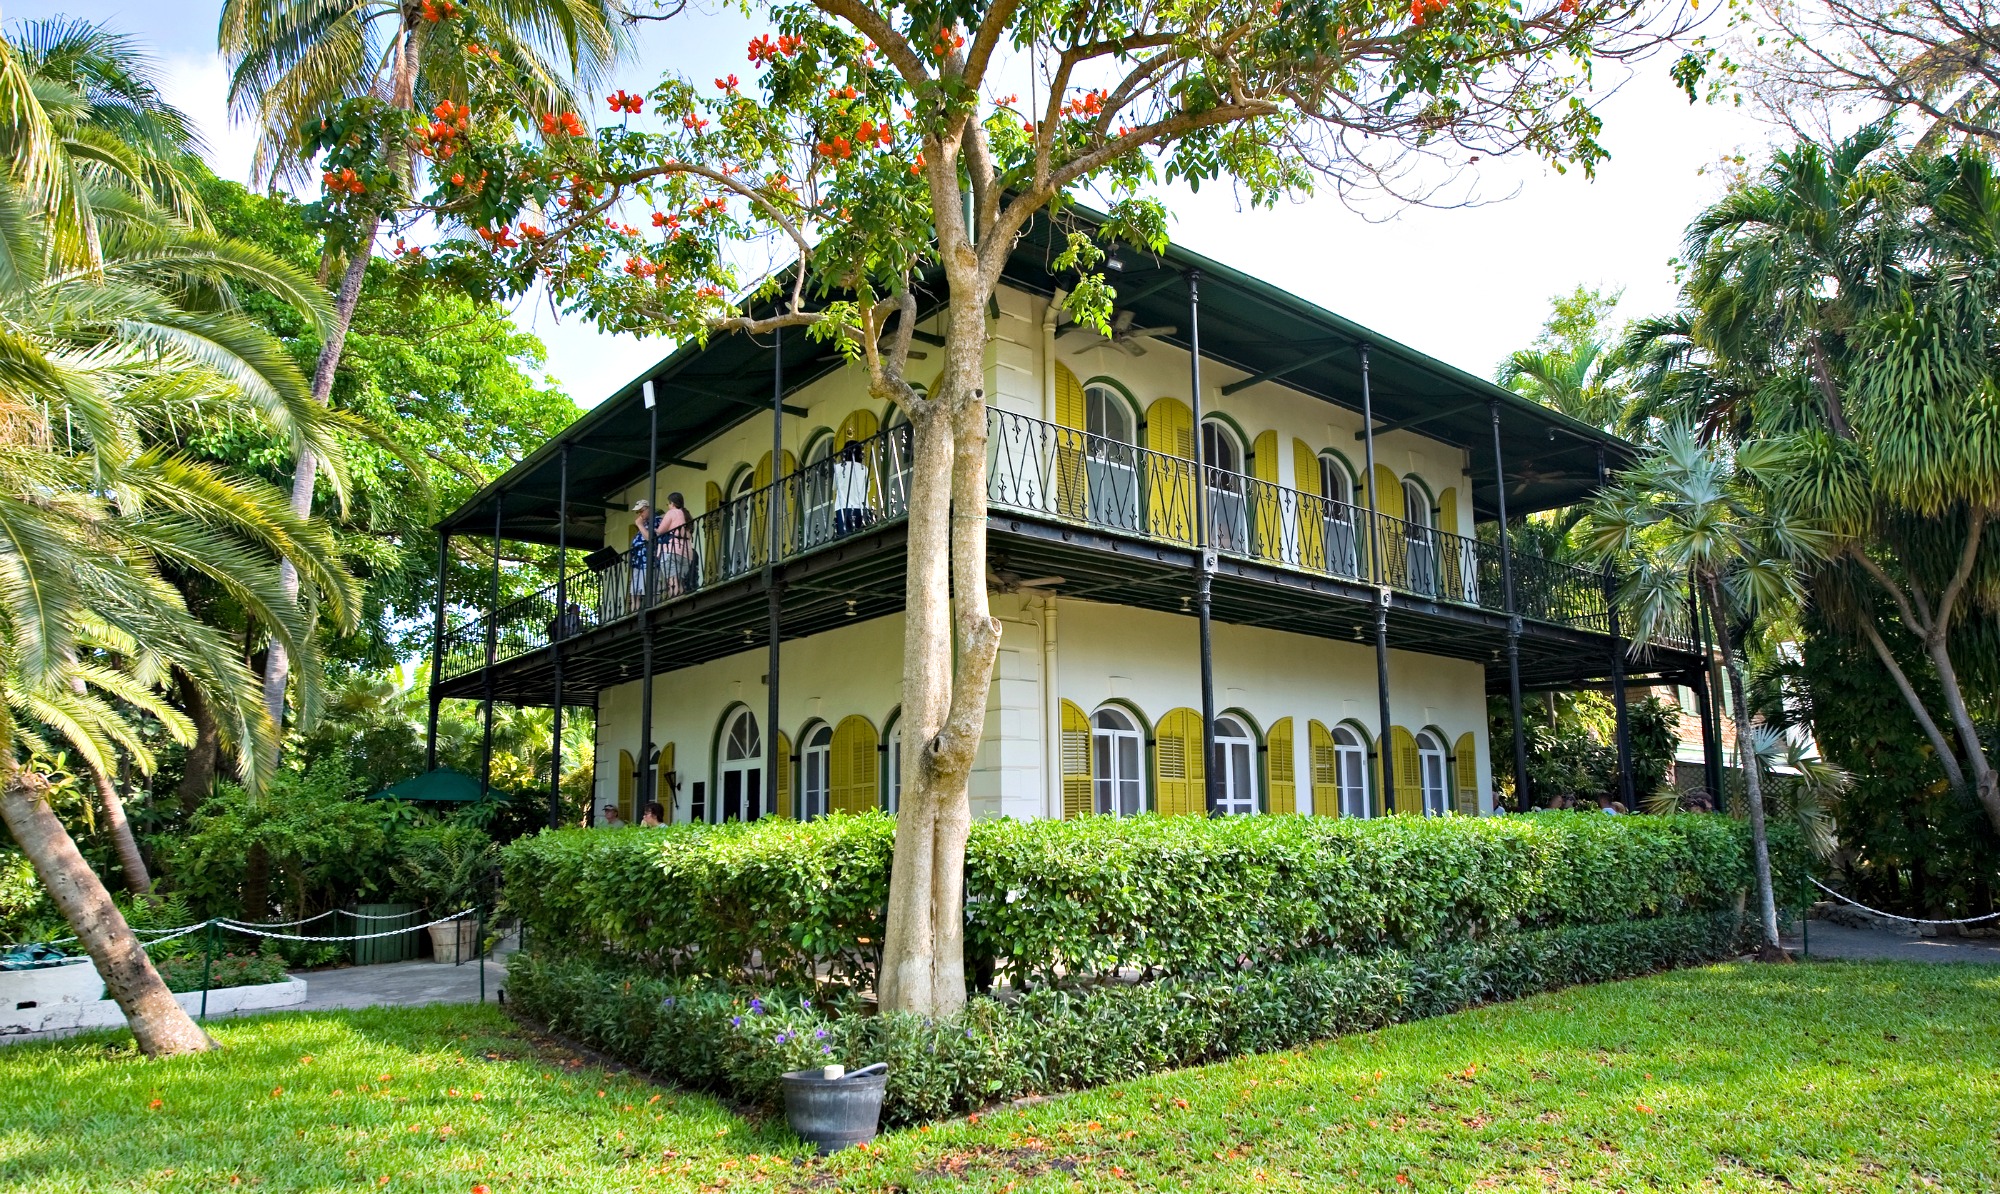 Ernest Hemingway's house in Key West